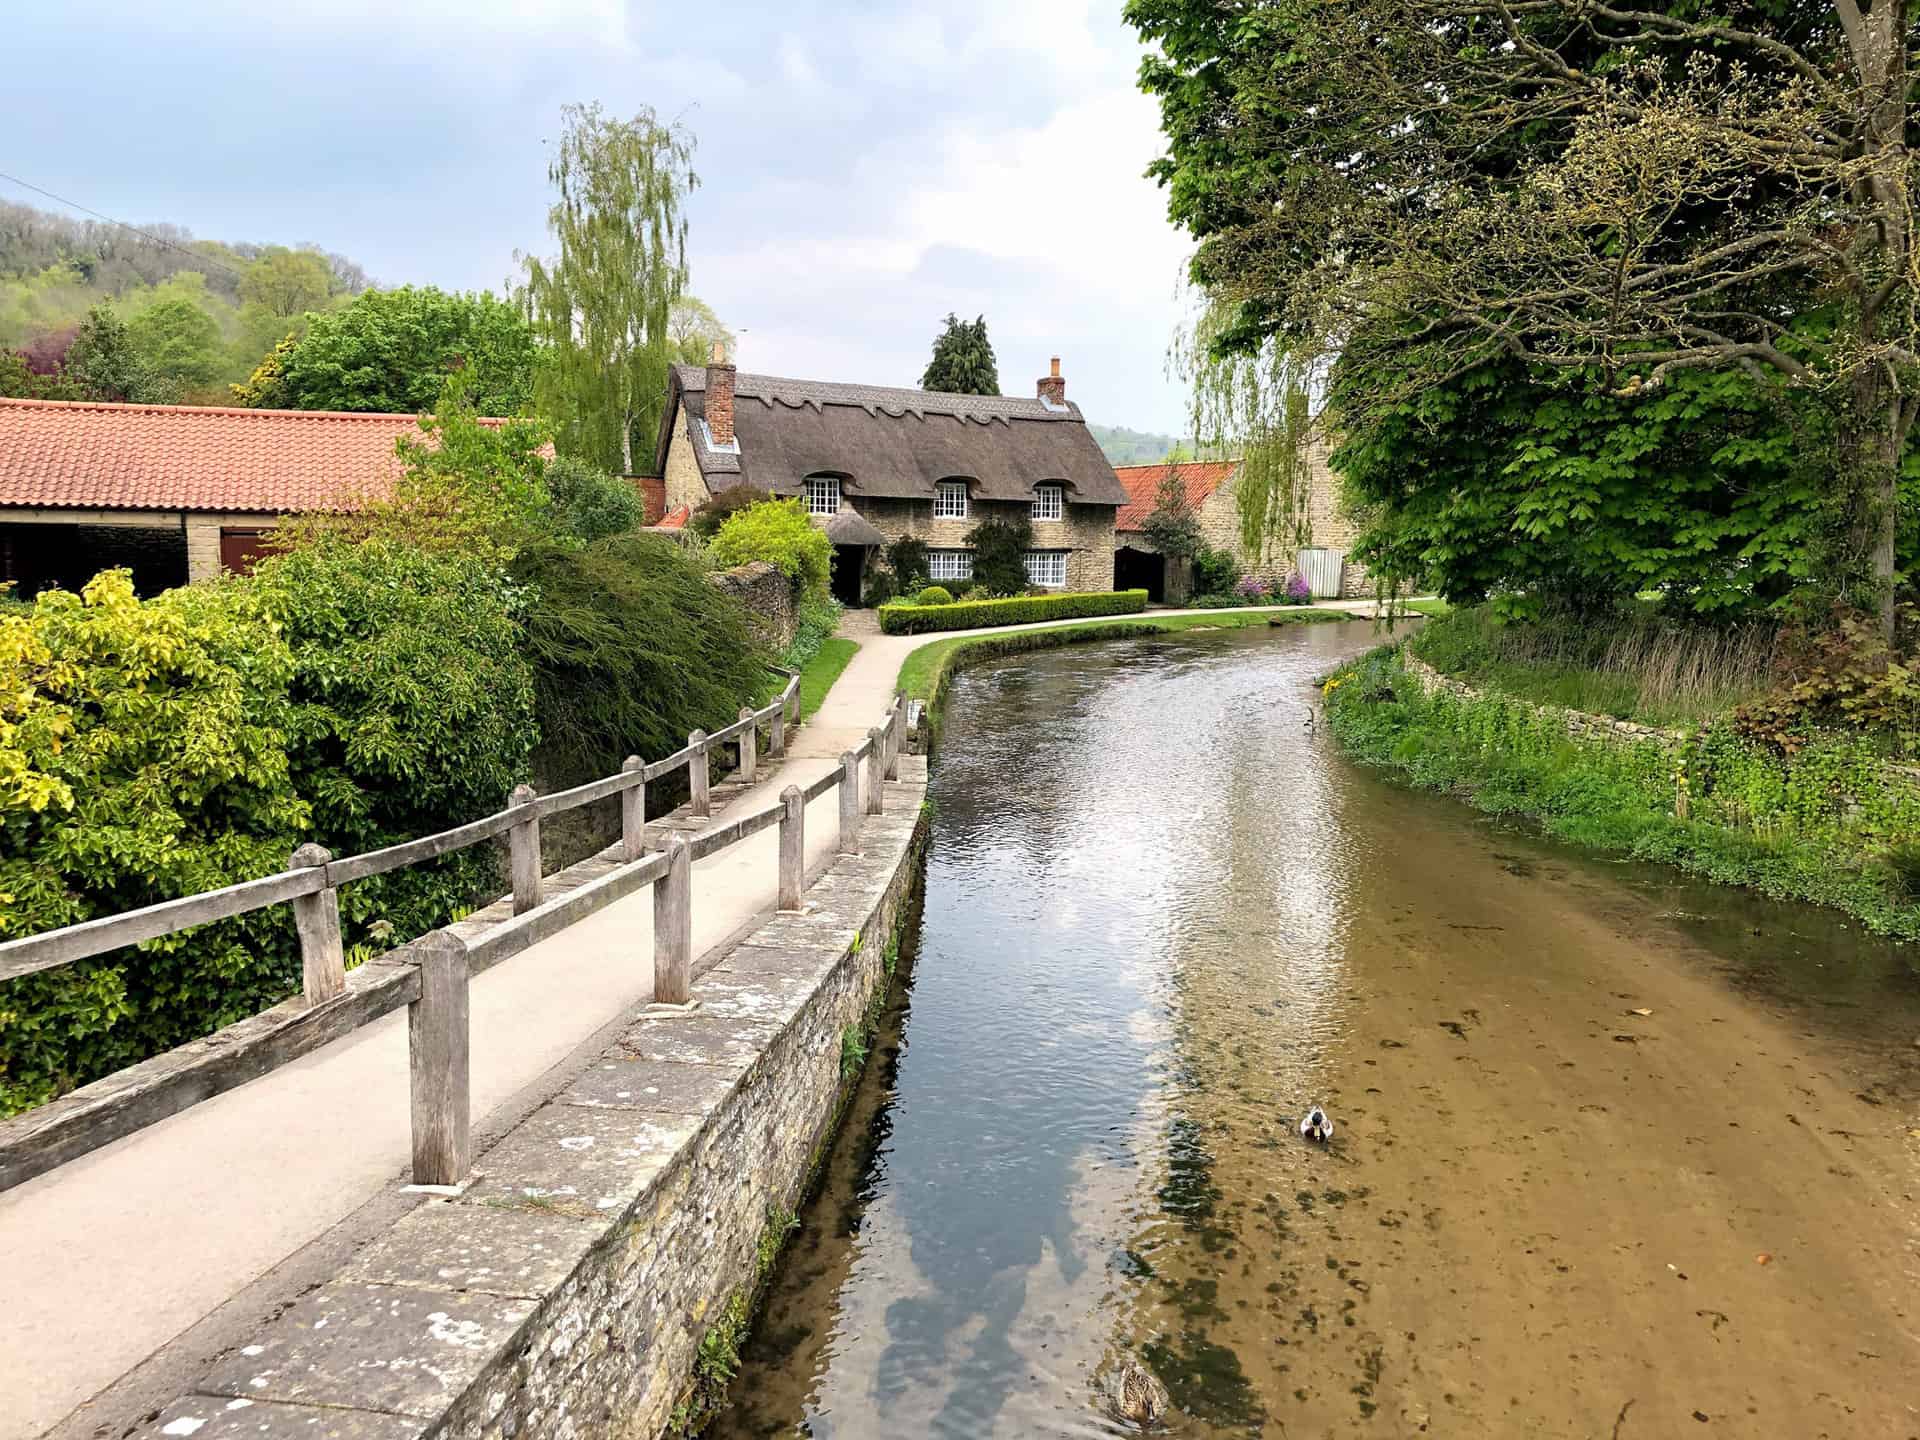 Thornton Beck which flows through the village of Thorton-le-Dale.